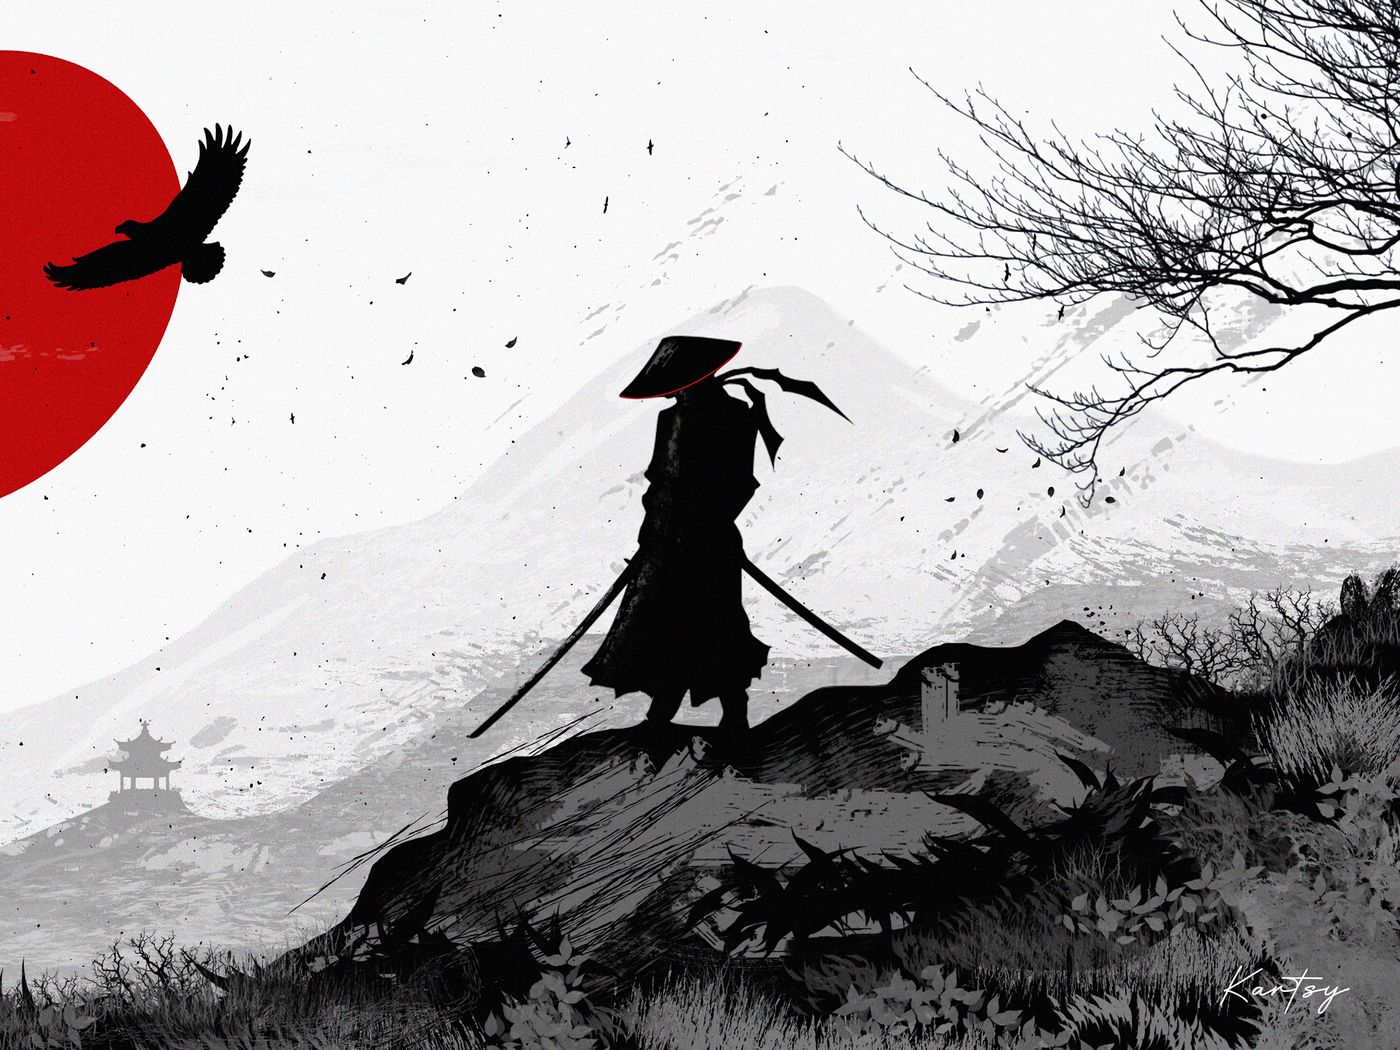 Download wallpaper 1400x1050 samurai, warrior, silhouette, art, black and  white standard 4:3 hd background